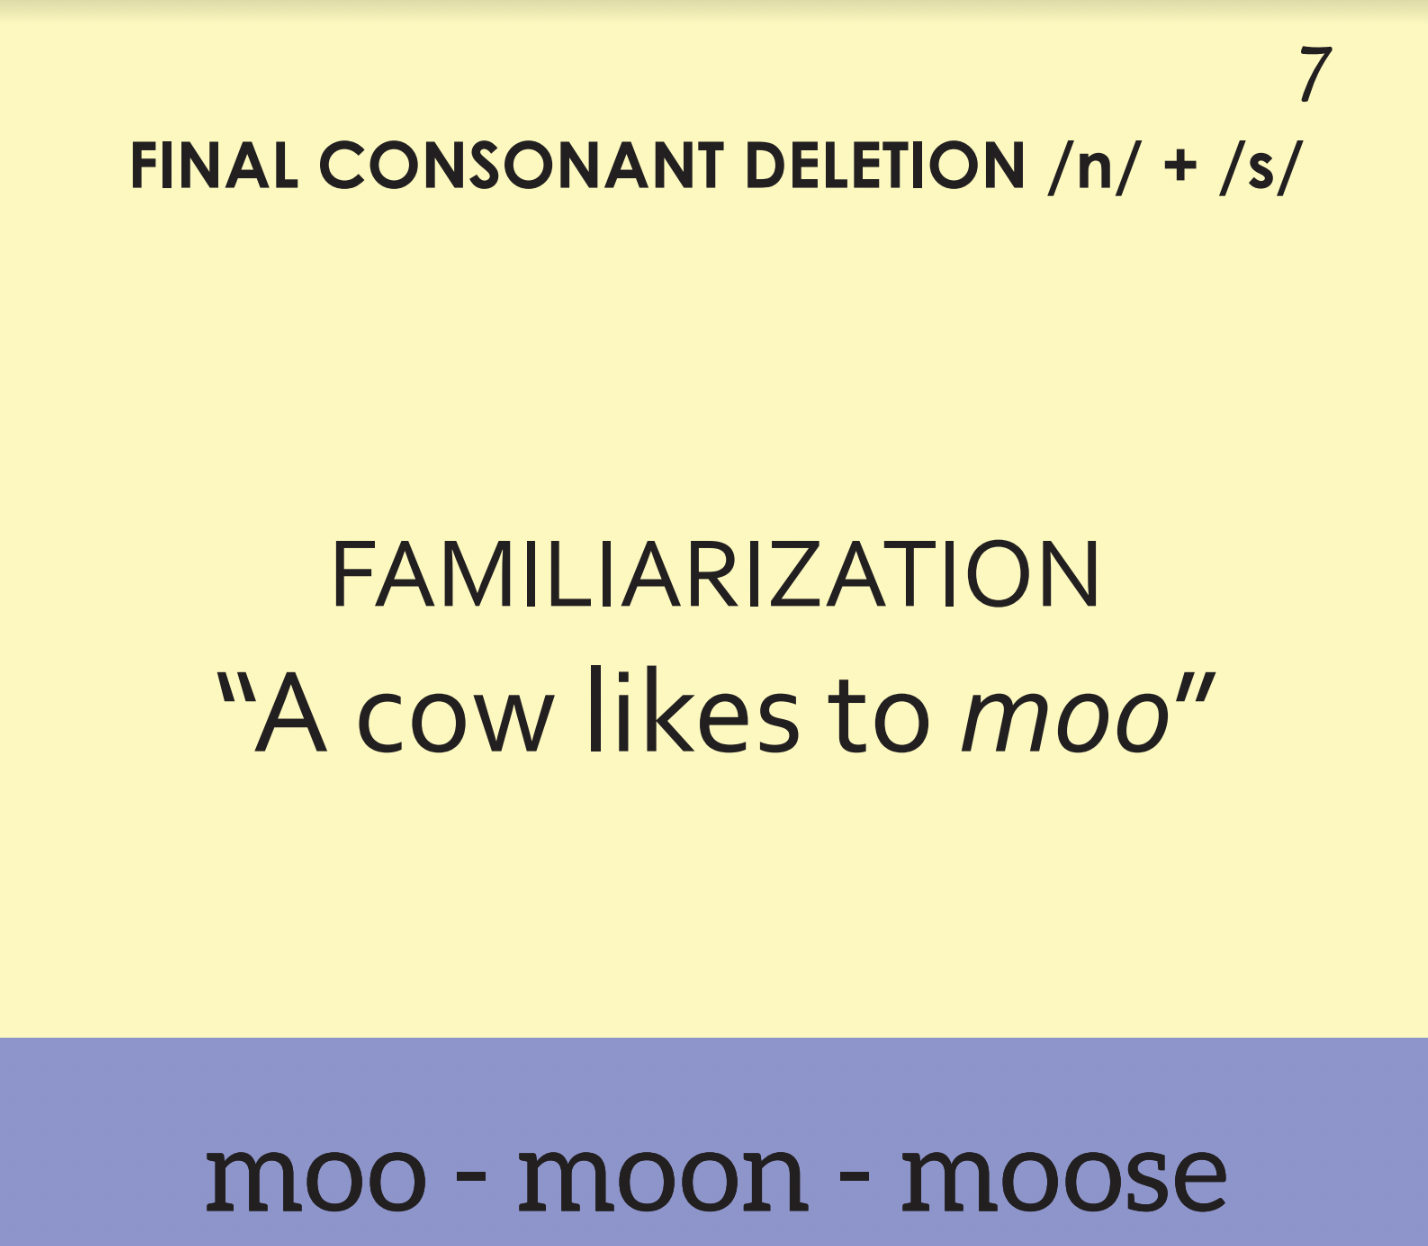 [title]Minimal Pairs: Final Consonant Deletion